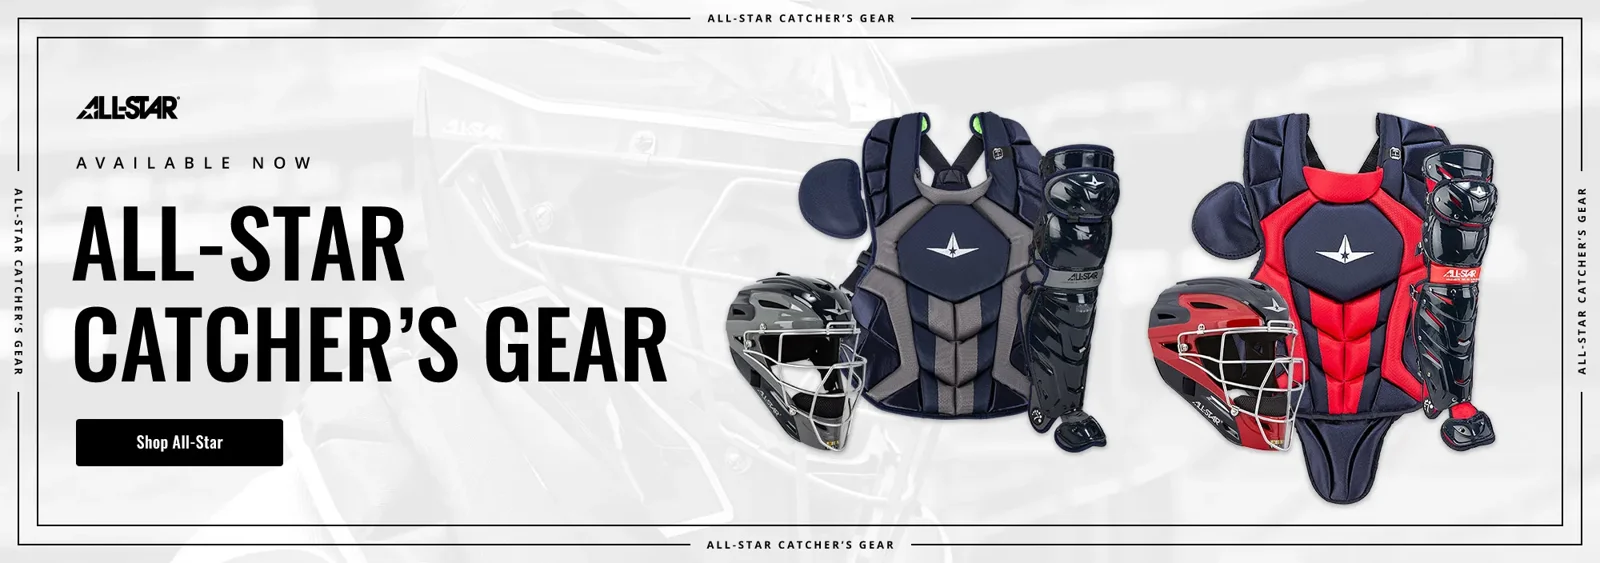 All-Star Catcher's Gear & Accessories